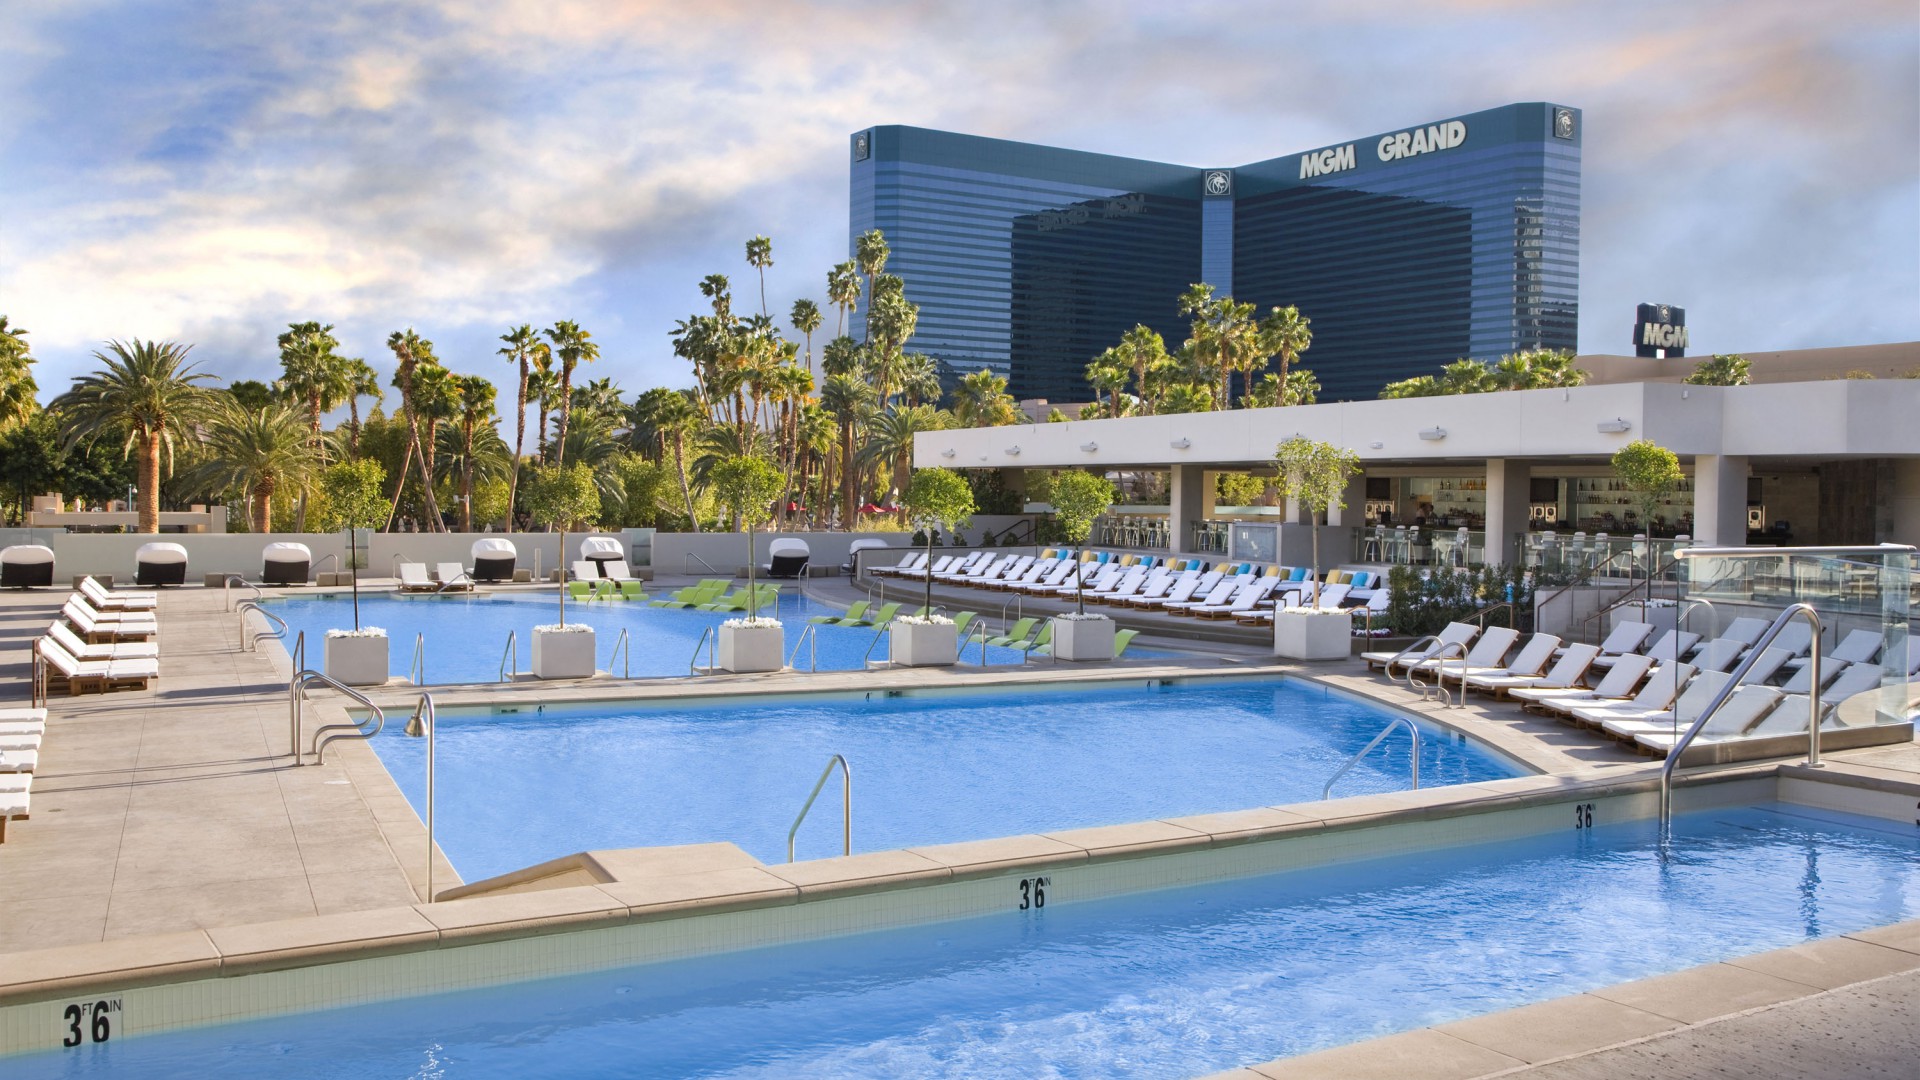 Wet Republic Las Vegas, The best hotel pools 2017, tourism, travel, resort, vacation, pool, water, sunbed (horizontal)